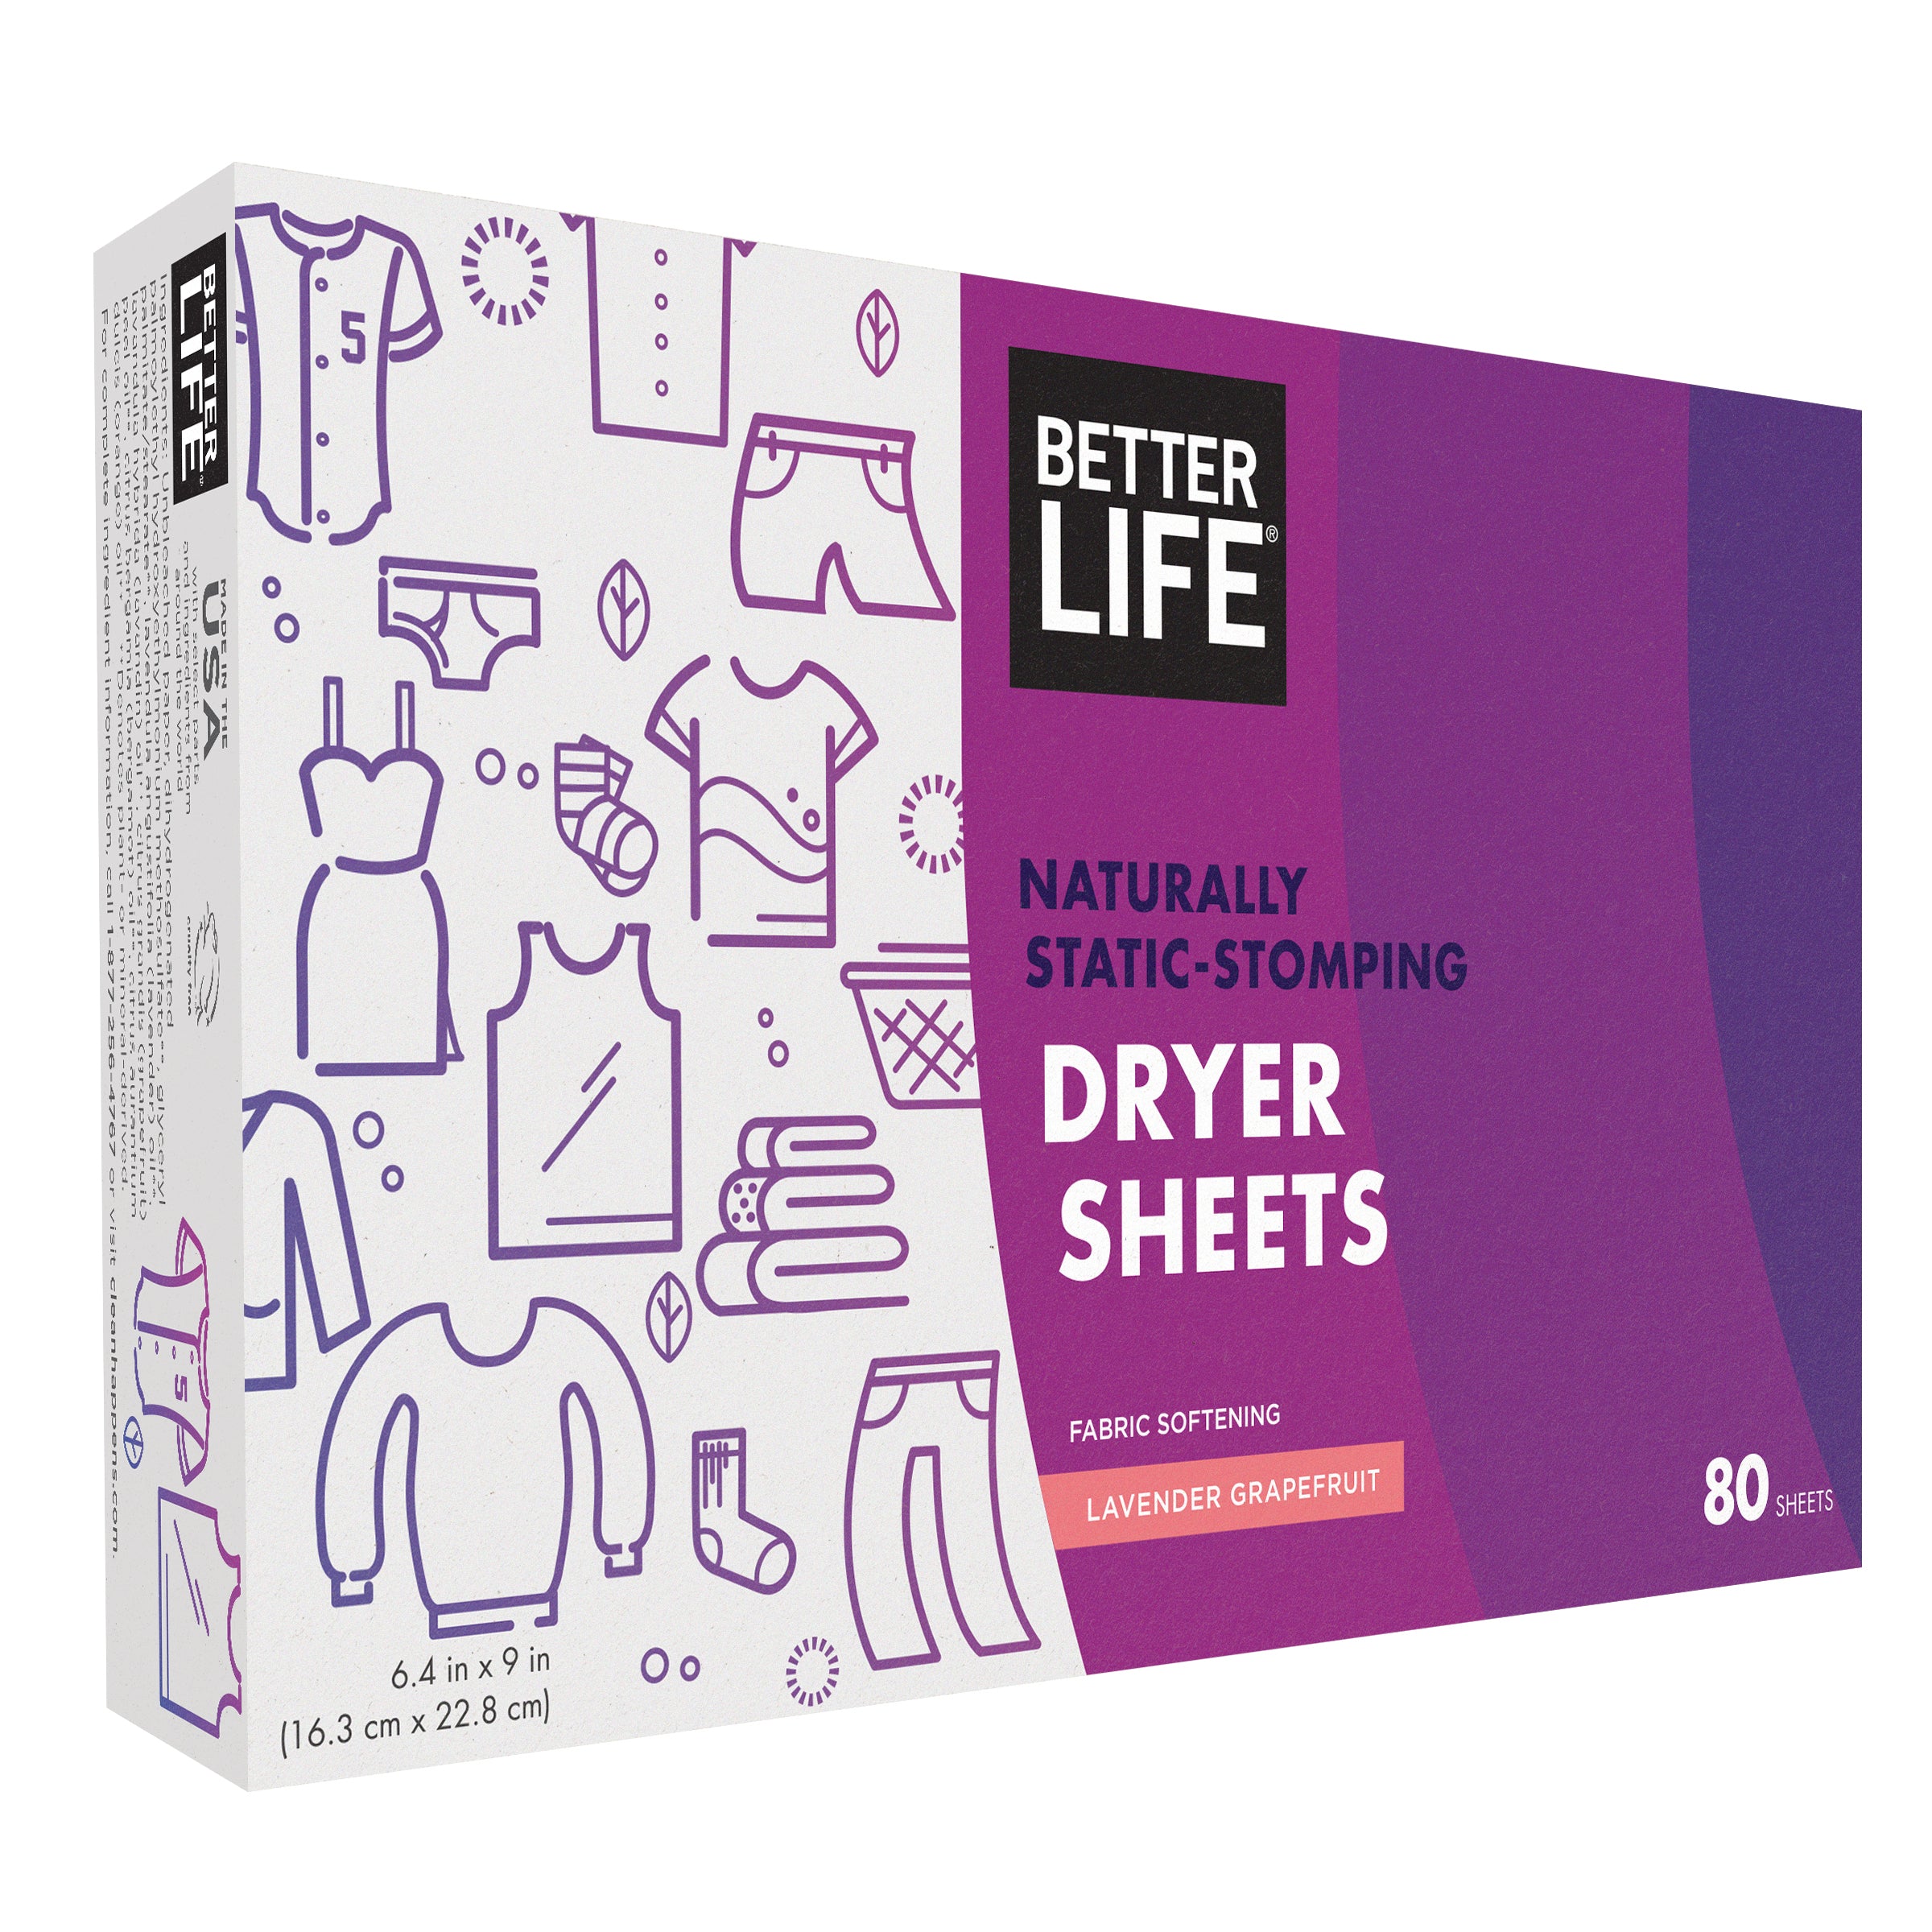 Natural Dryer Sheets – Better Life